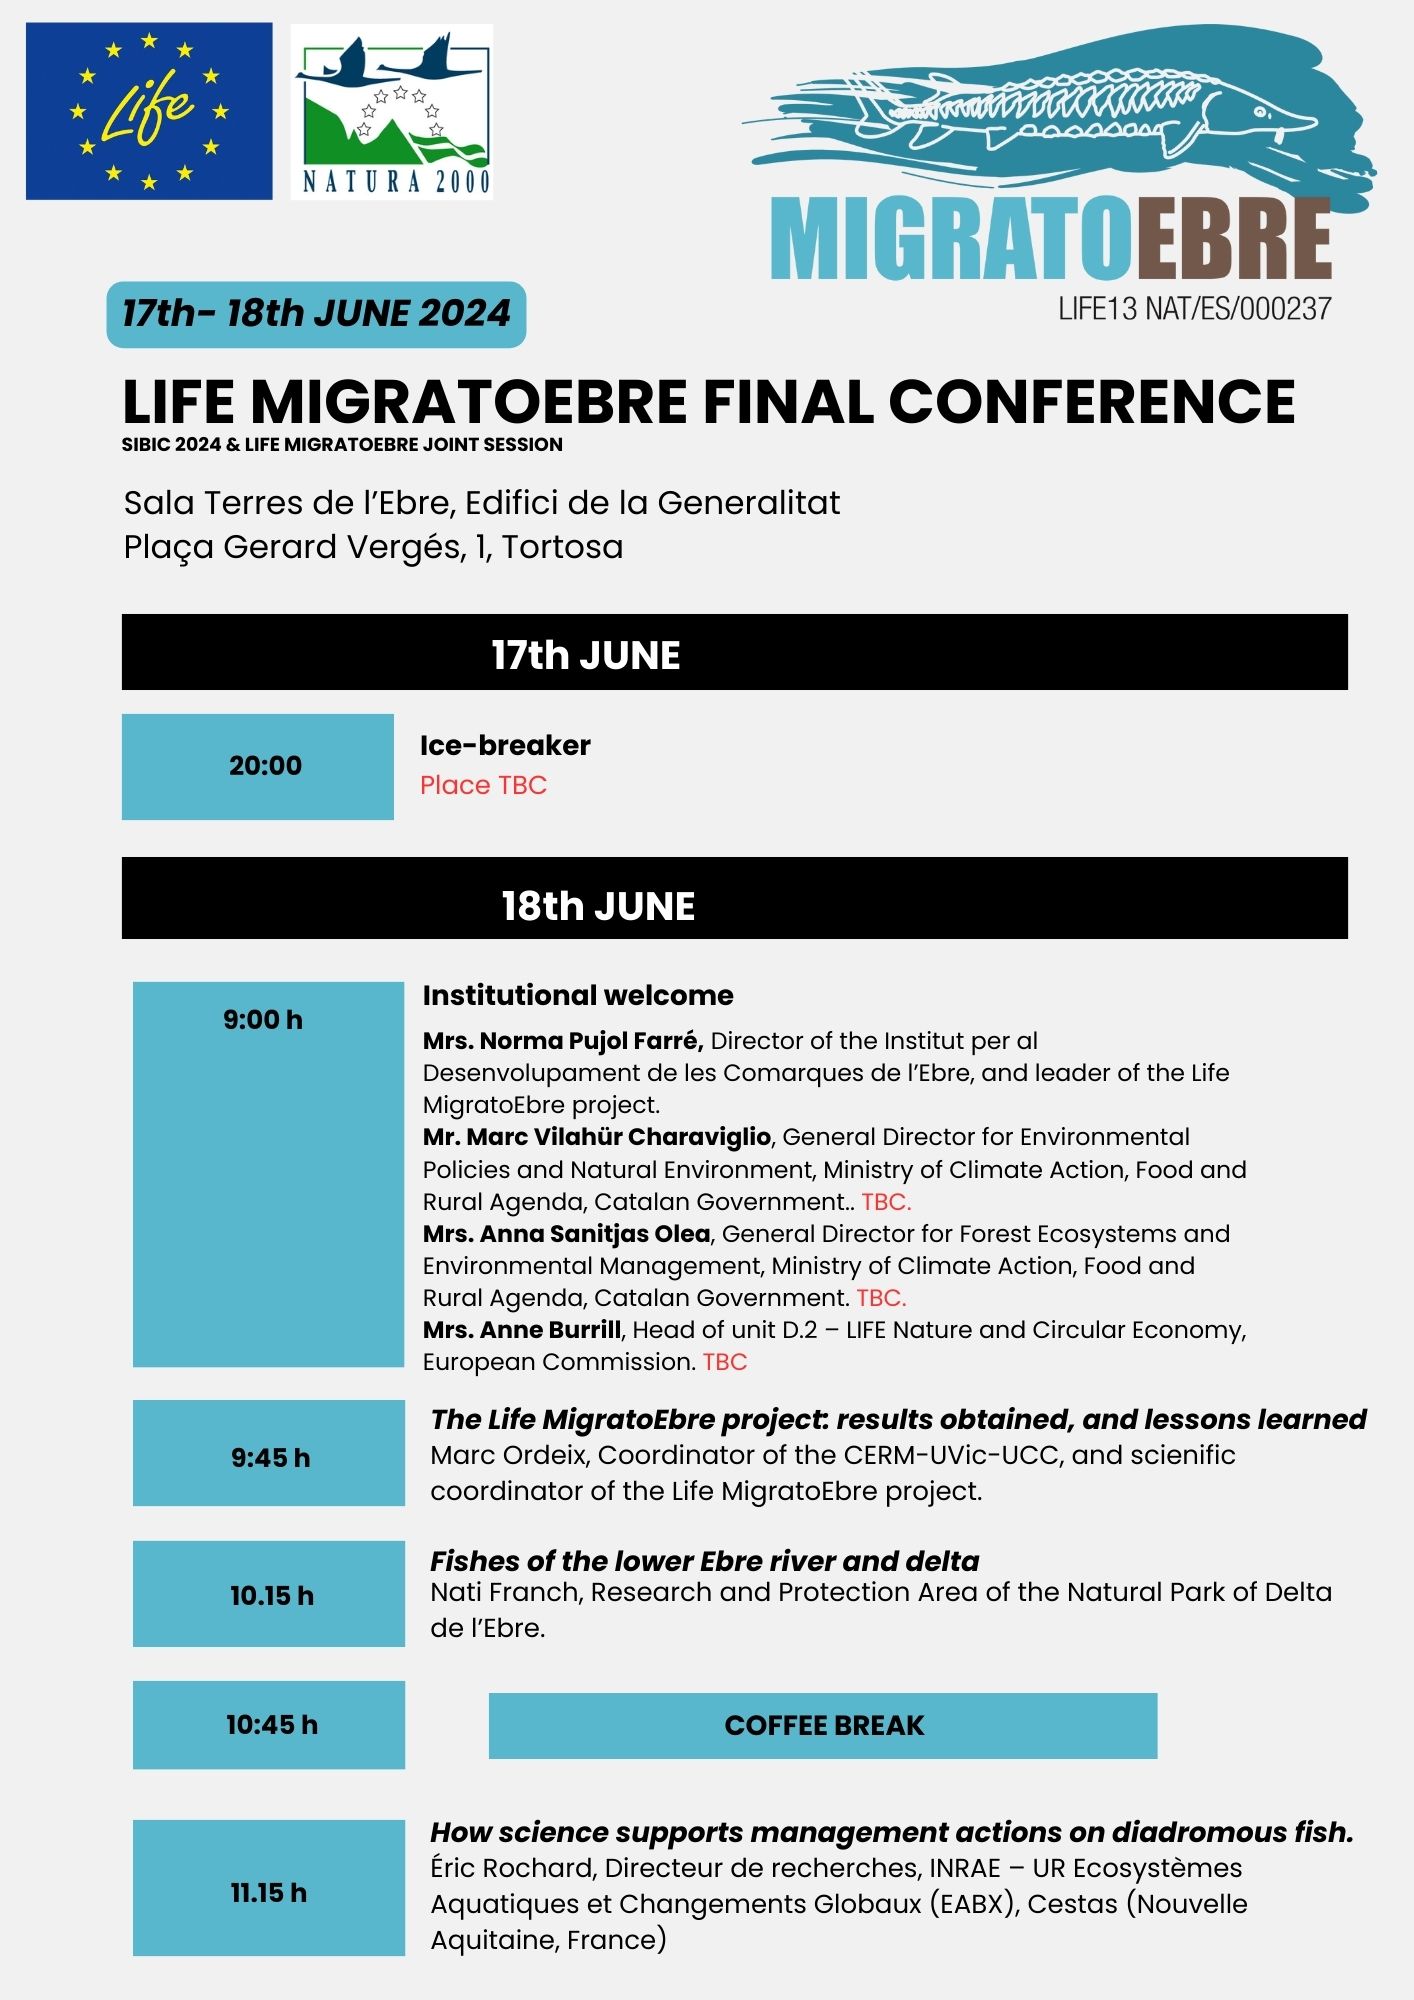 LIFE Migratoebre Final Conference